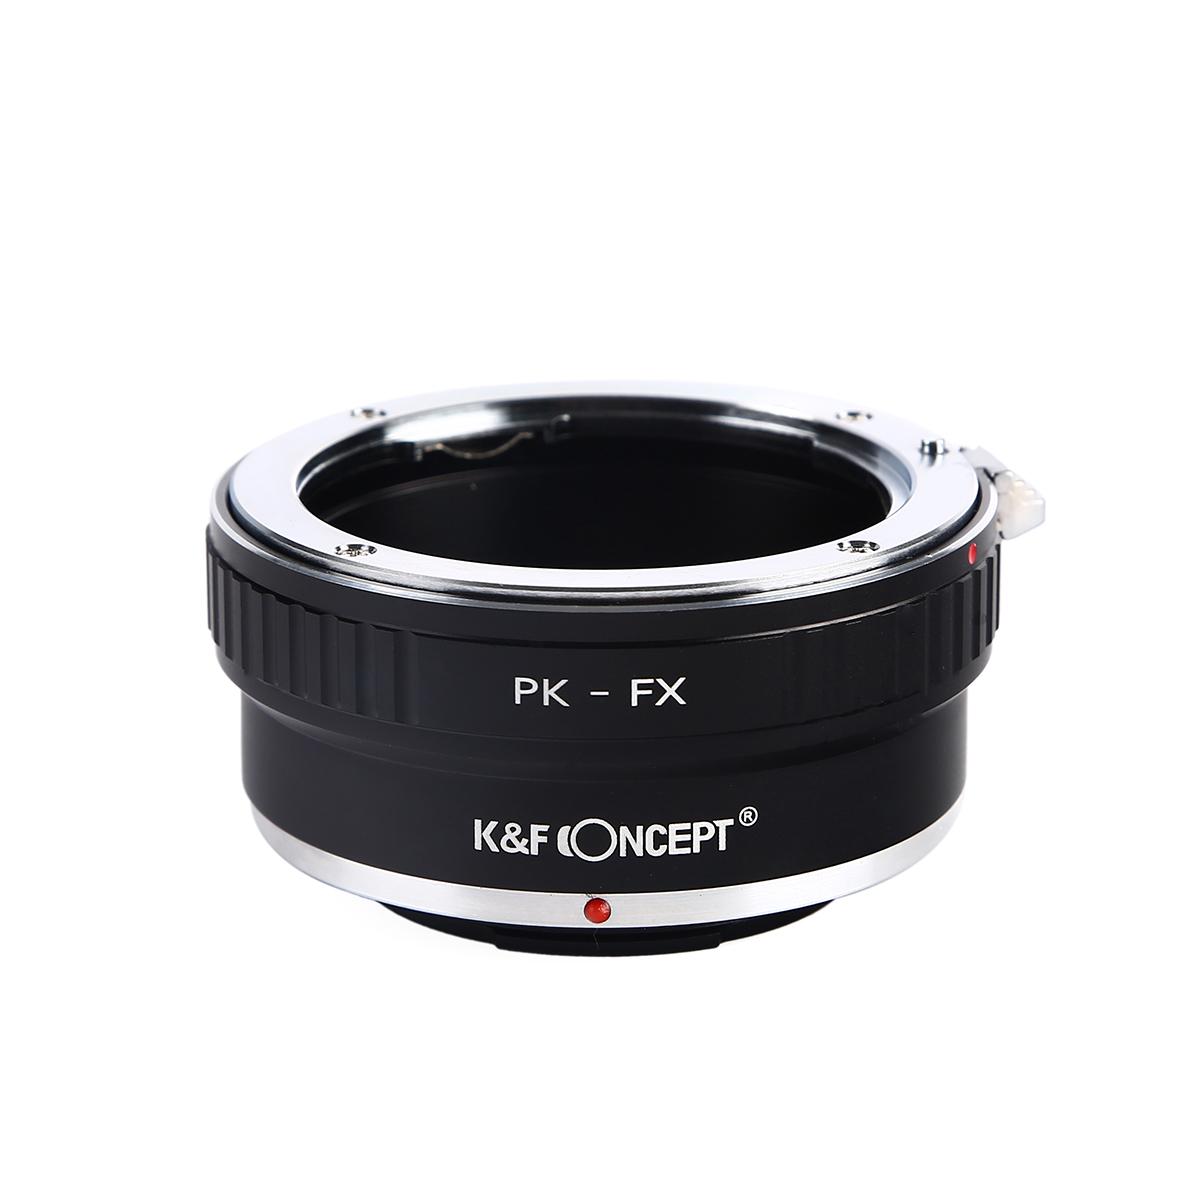 K&F Concept Lens Adapter KF06.059 for PK - FX อะแดปเตอร์เลนส์